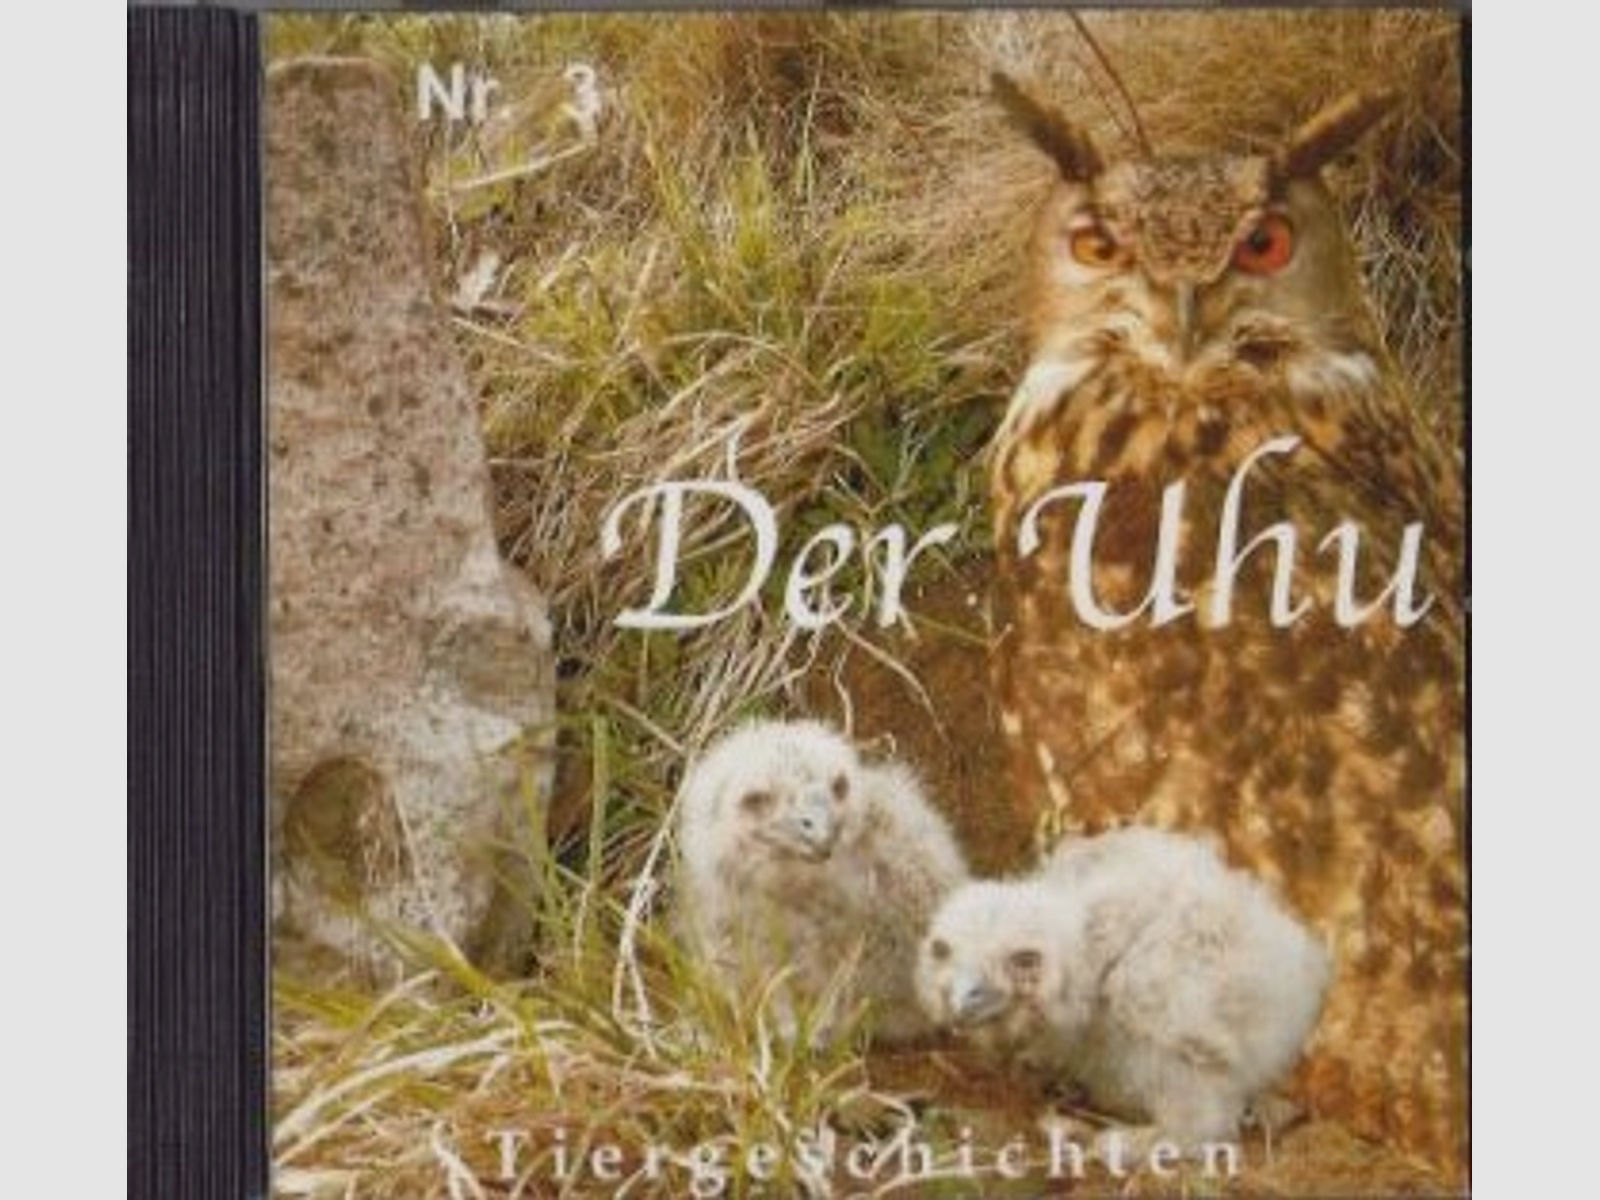 Hörbuch " Der Uhu"